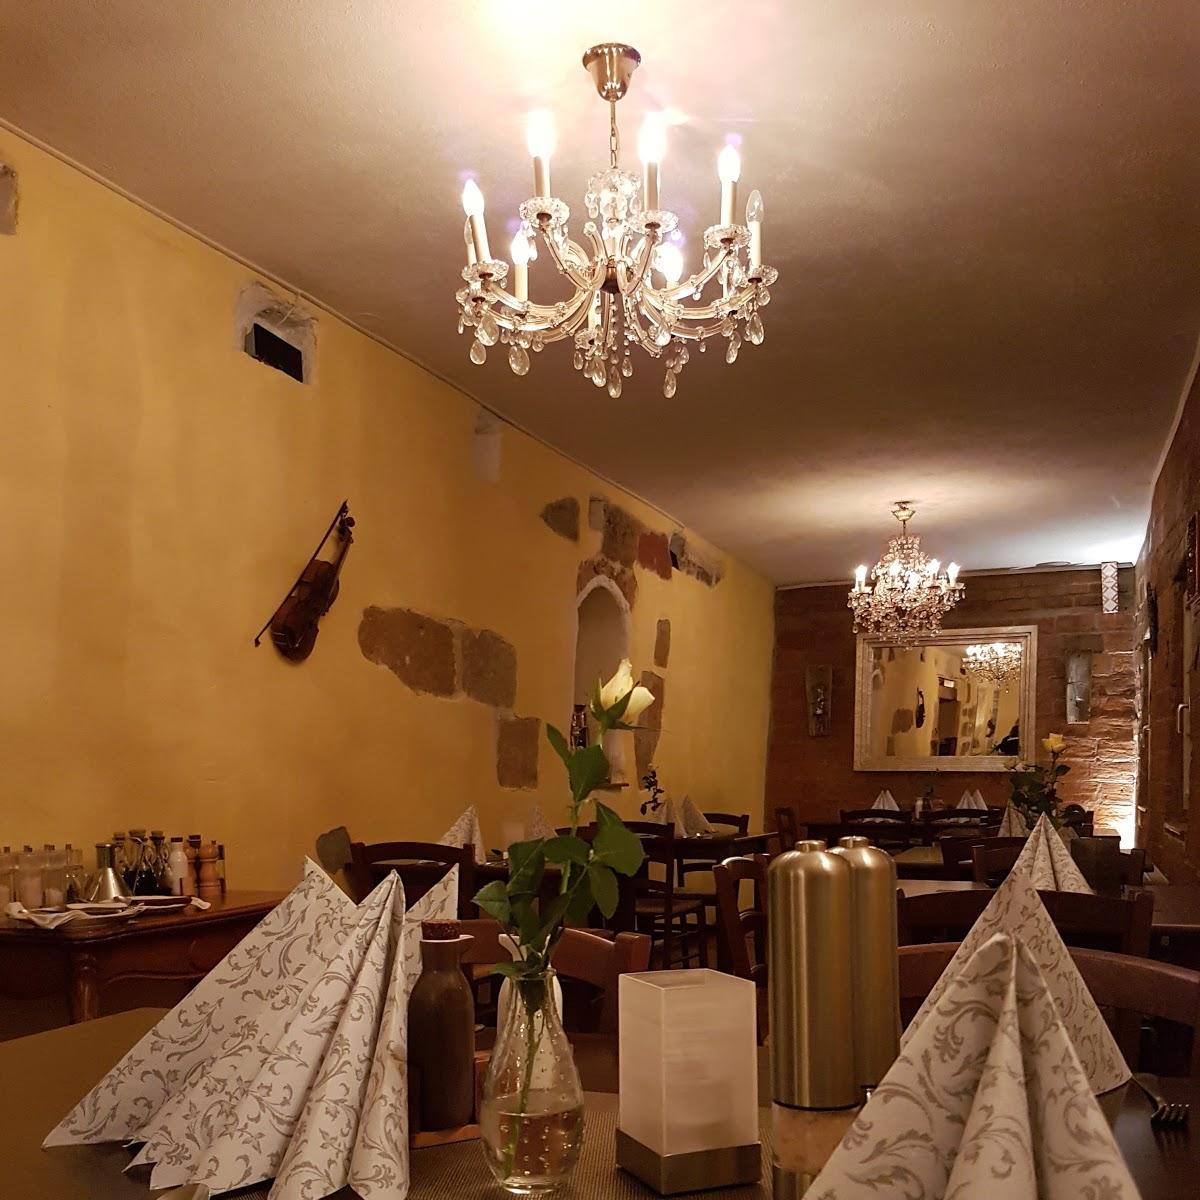 Restaurant "Trattoria Via Romana Da Raffaele" in  Bayreuth